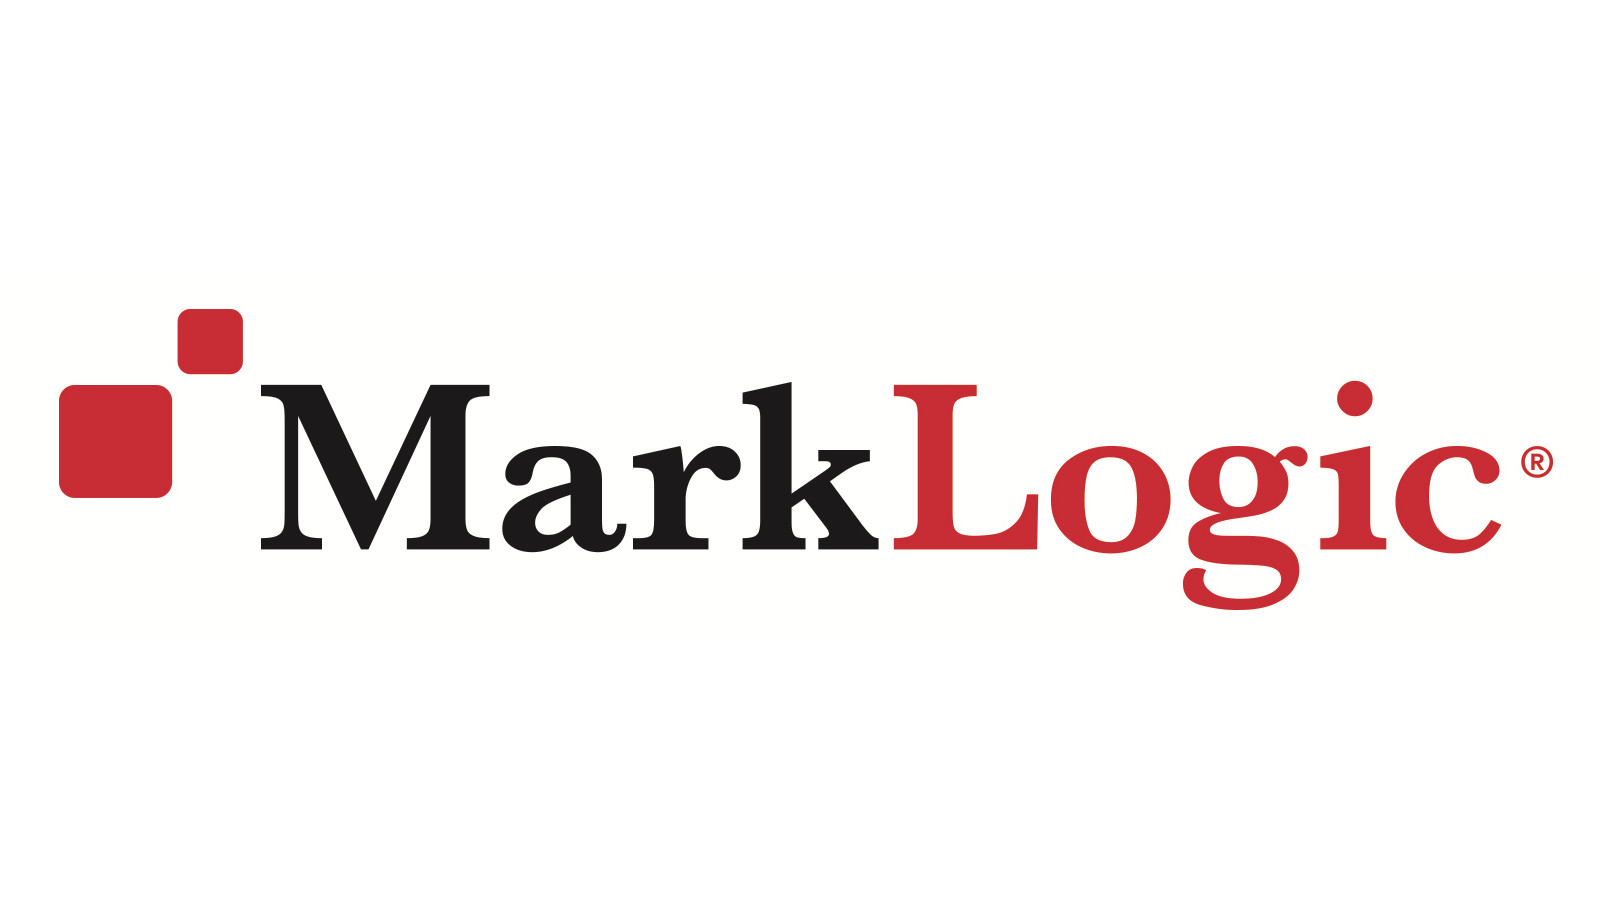 MarkLogic